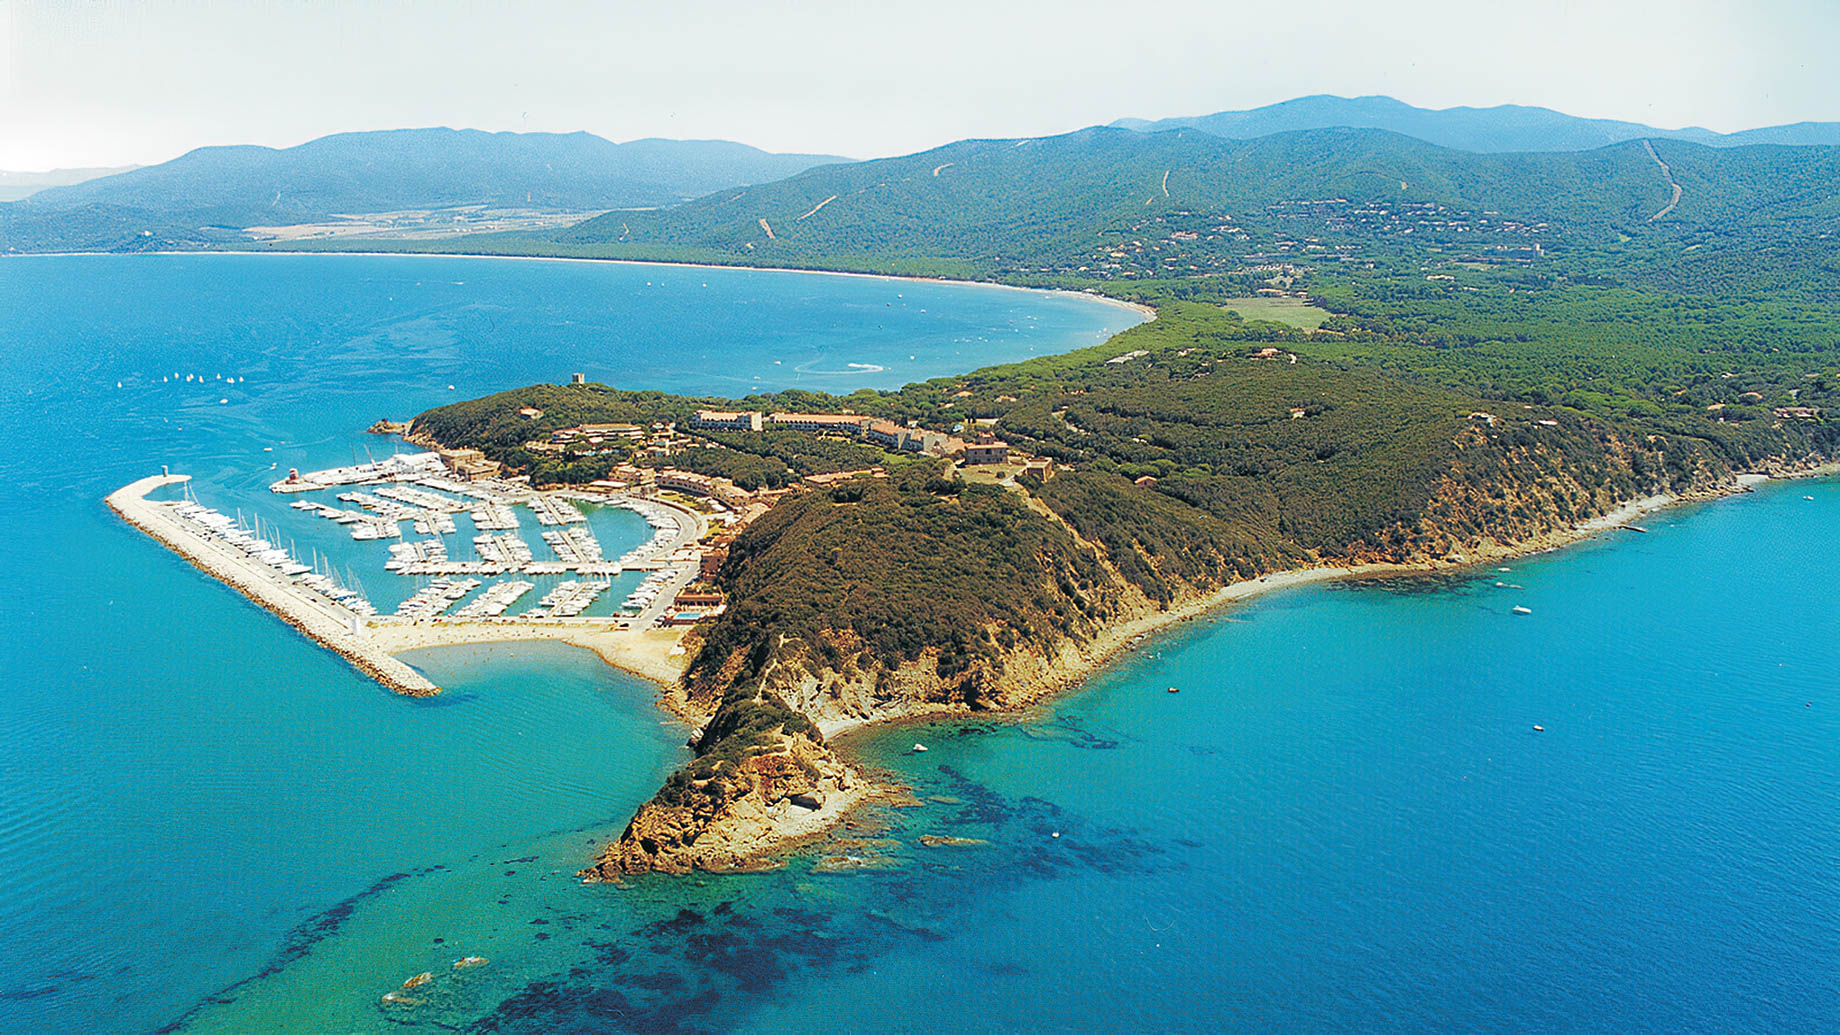 Baglioni Resort Cala del Porto Tuscany – Punta Ala, Italy – Aerial View